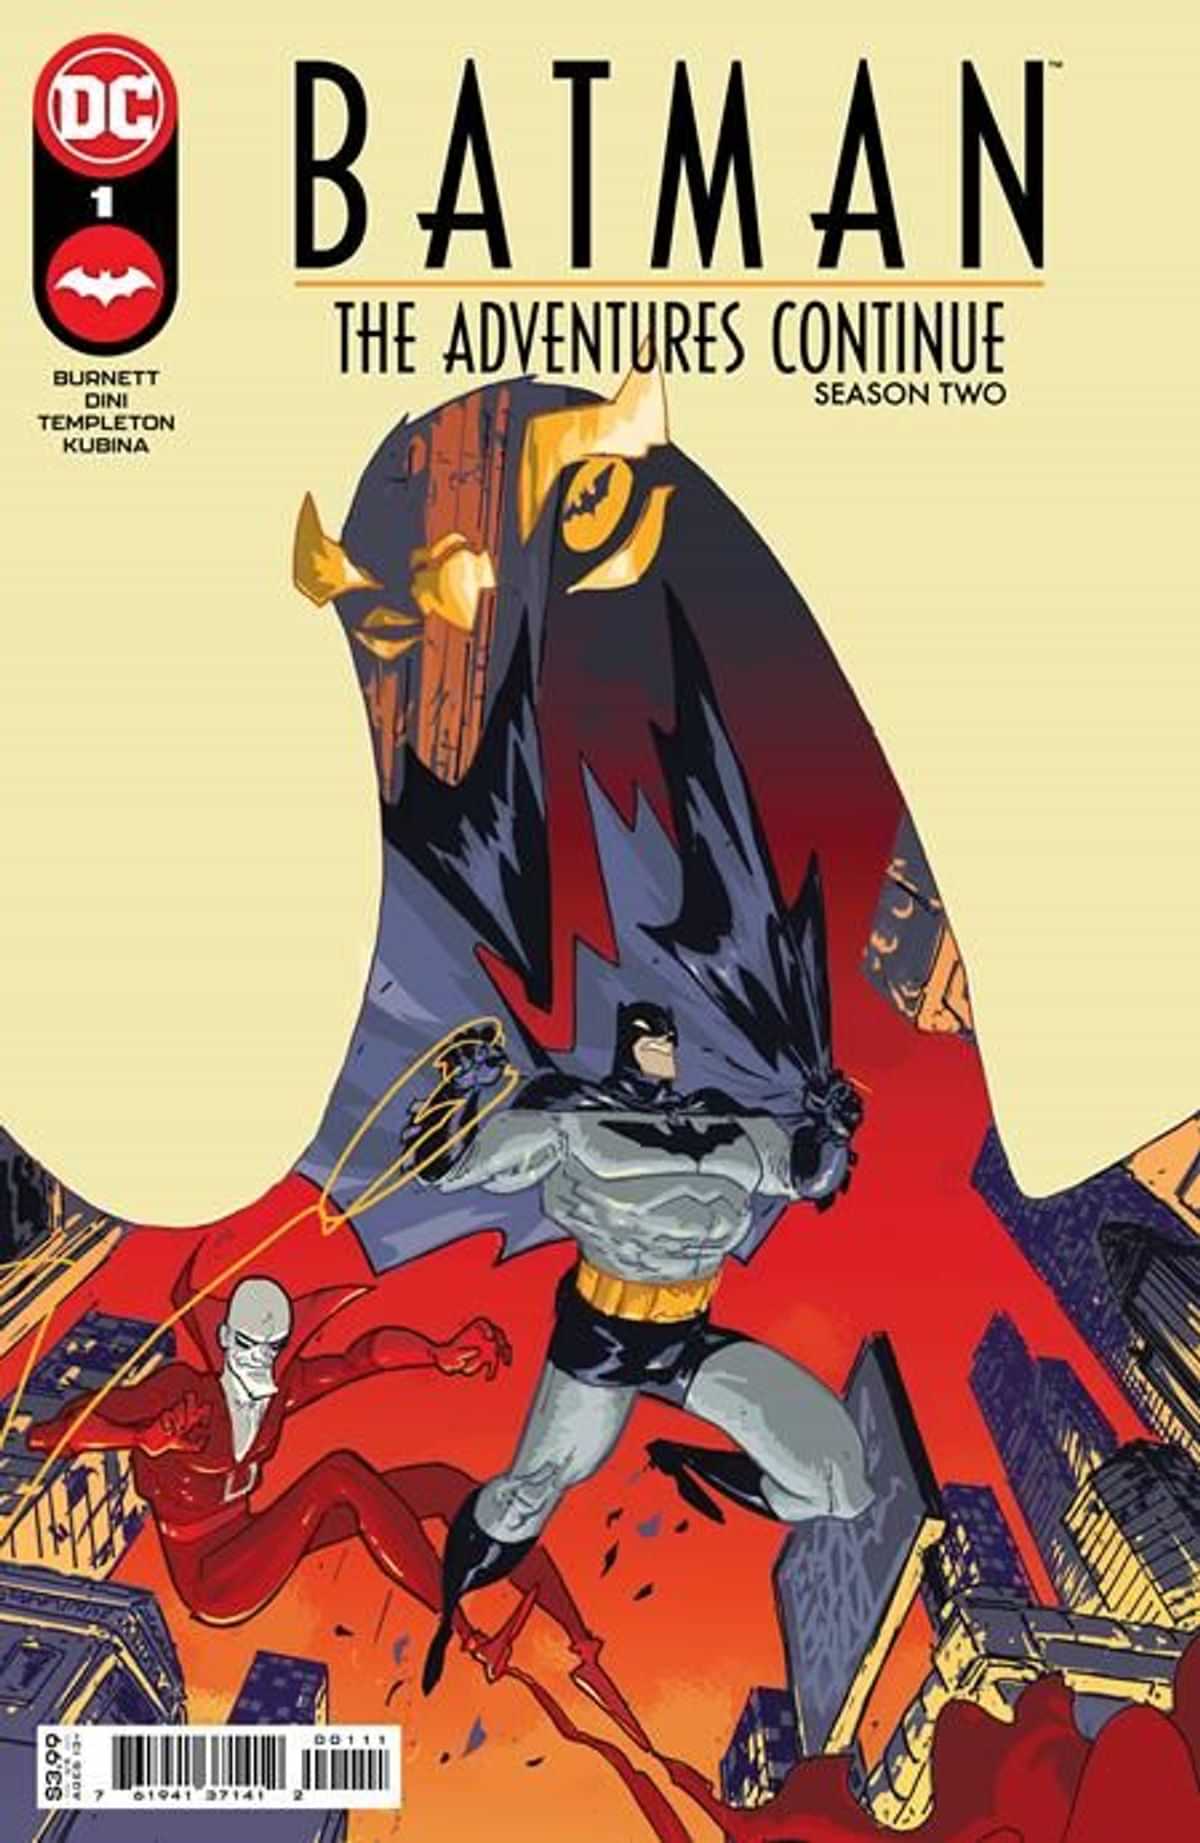 Batman The Adventures Continue Season II #1 CVR A Riley Rossmo - Zeus  Comics, Dallas, TX